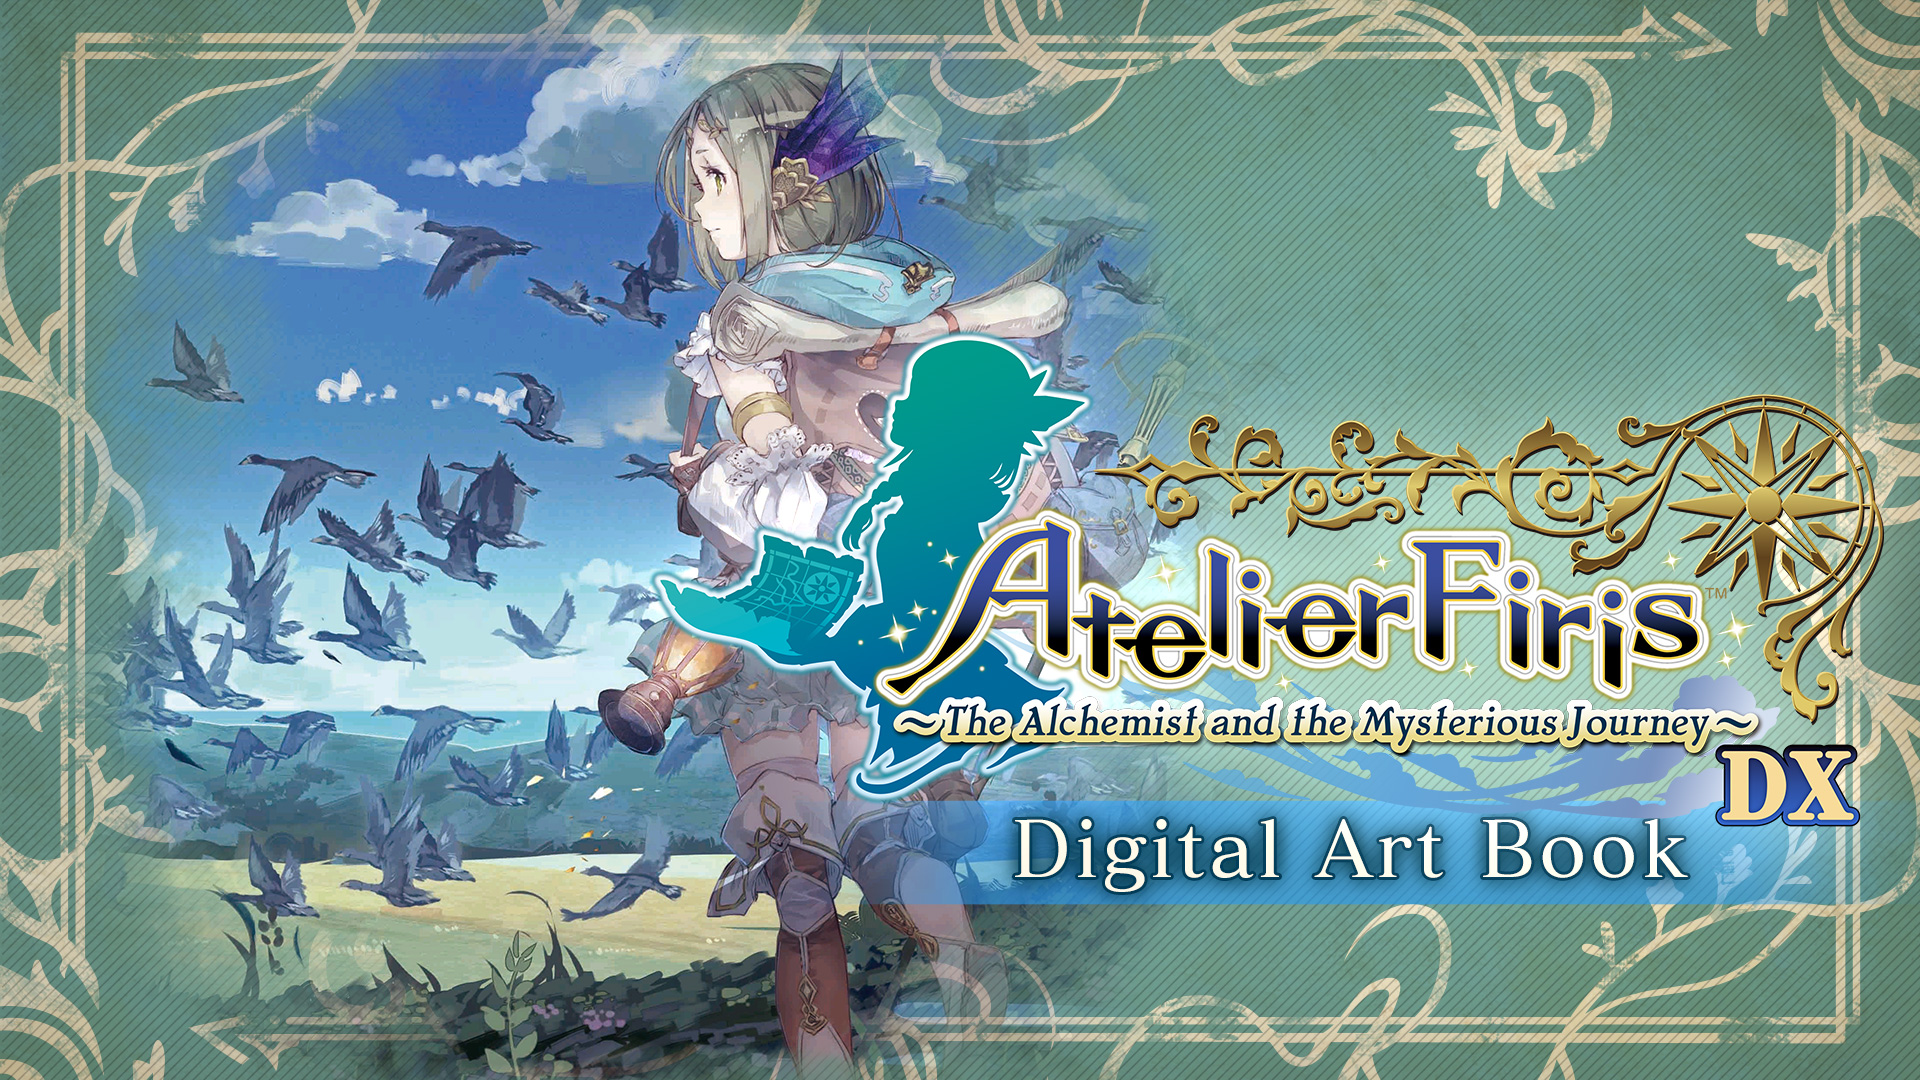 Atelier Firis: The Alchemist and the Mysterious Journey DX Digital Art Book